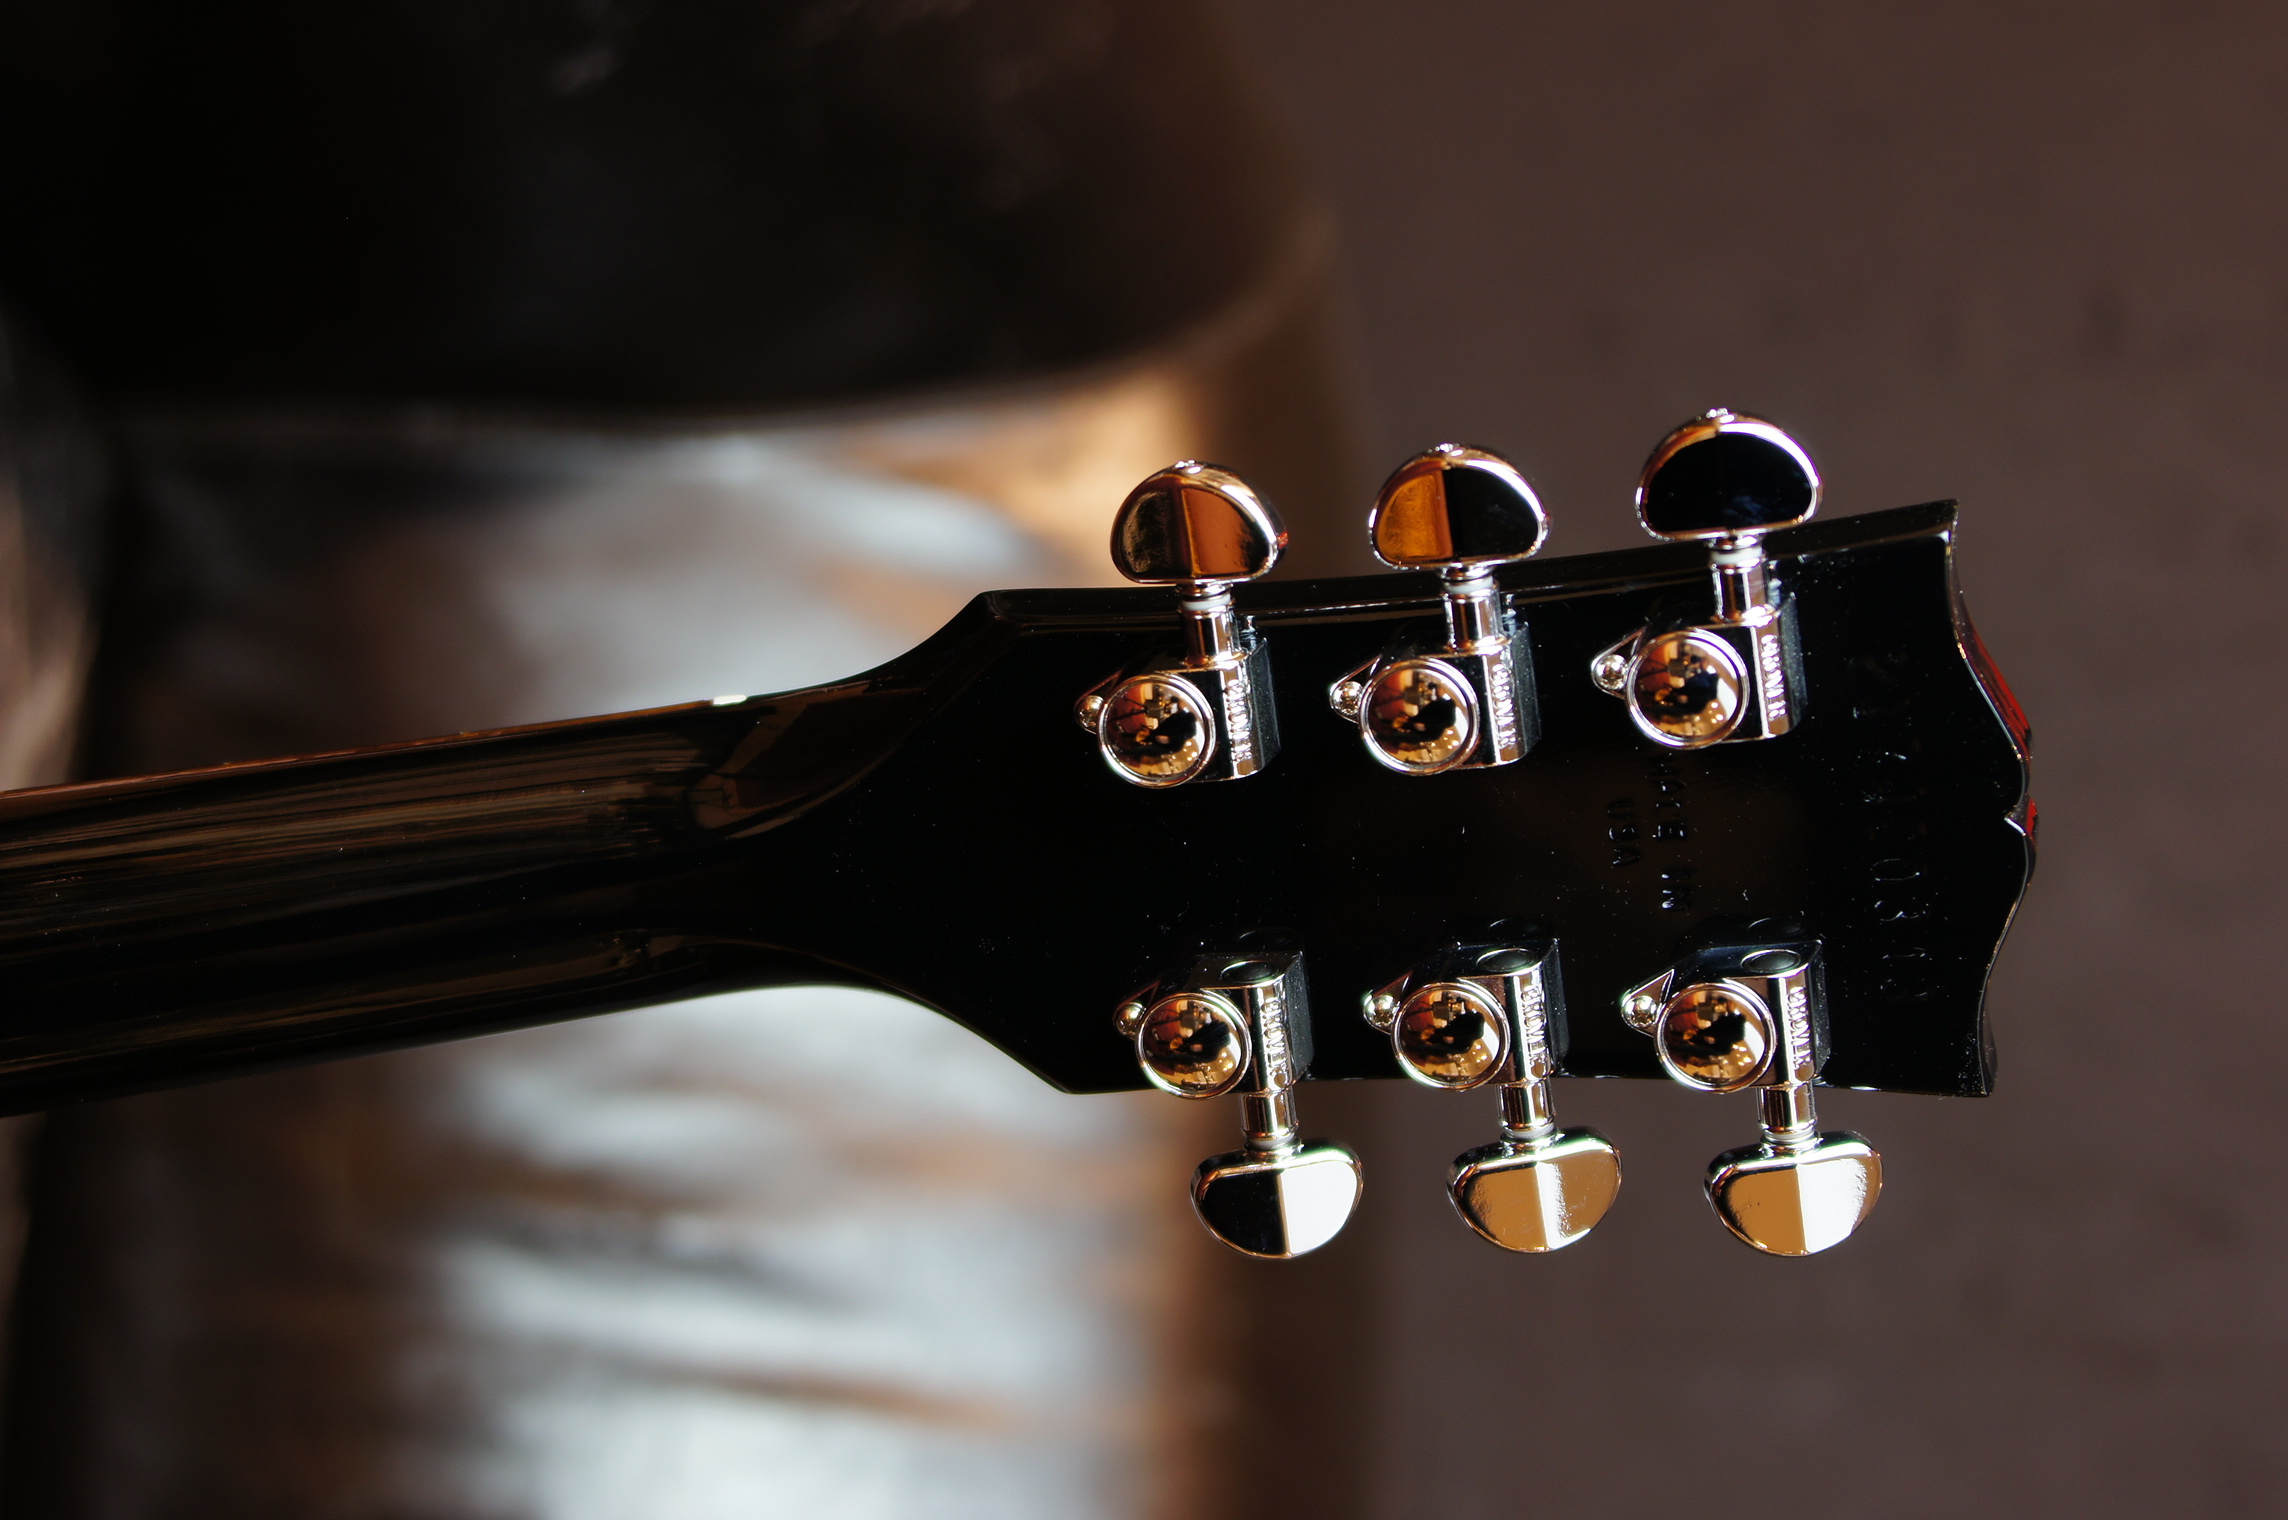 Gibson Les Paul Studio Ebony inklusive Gigbag